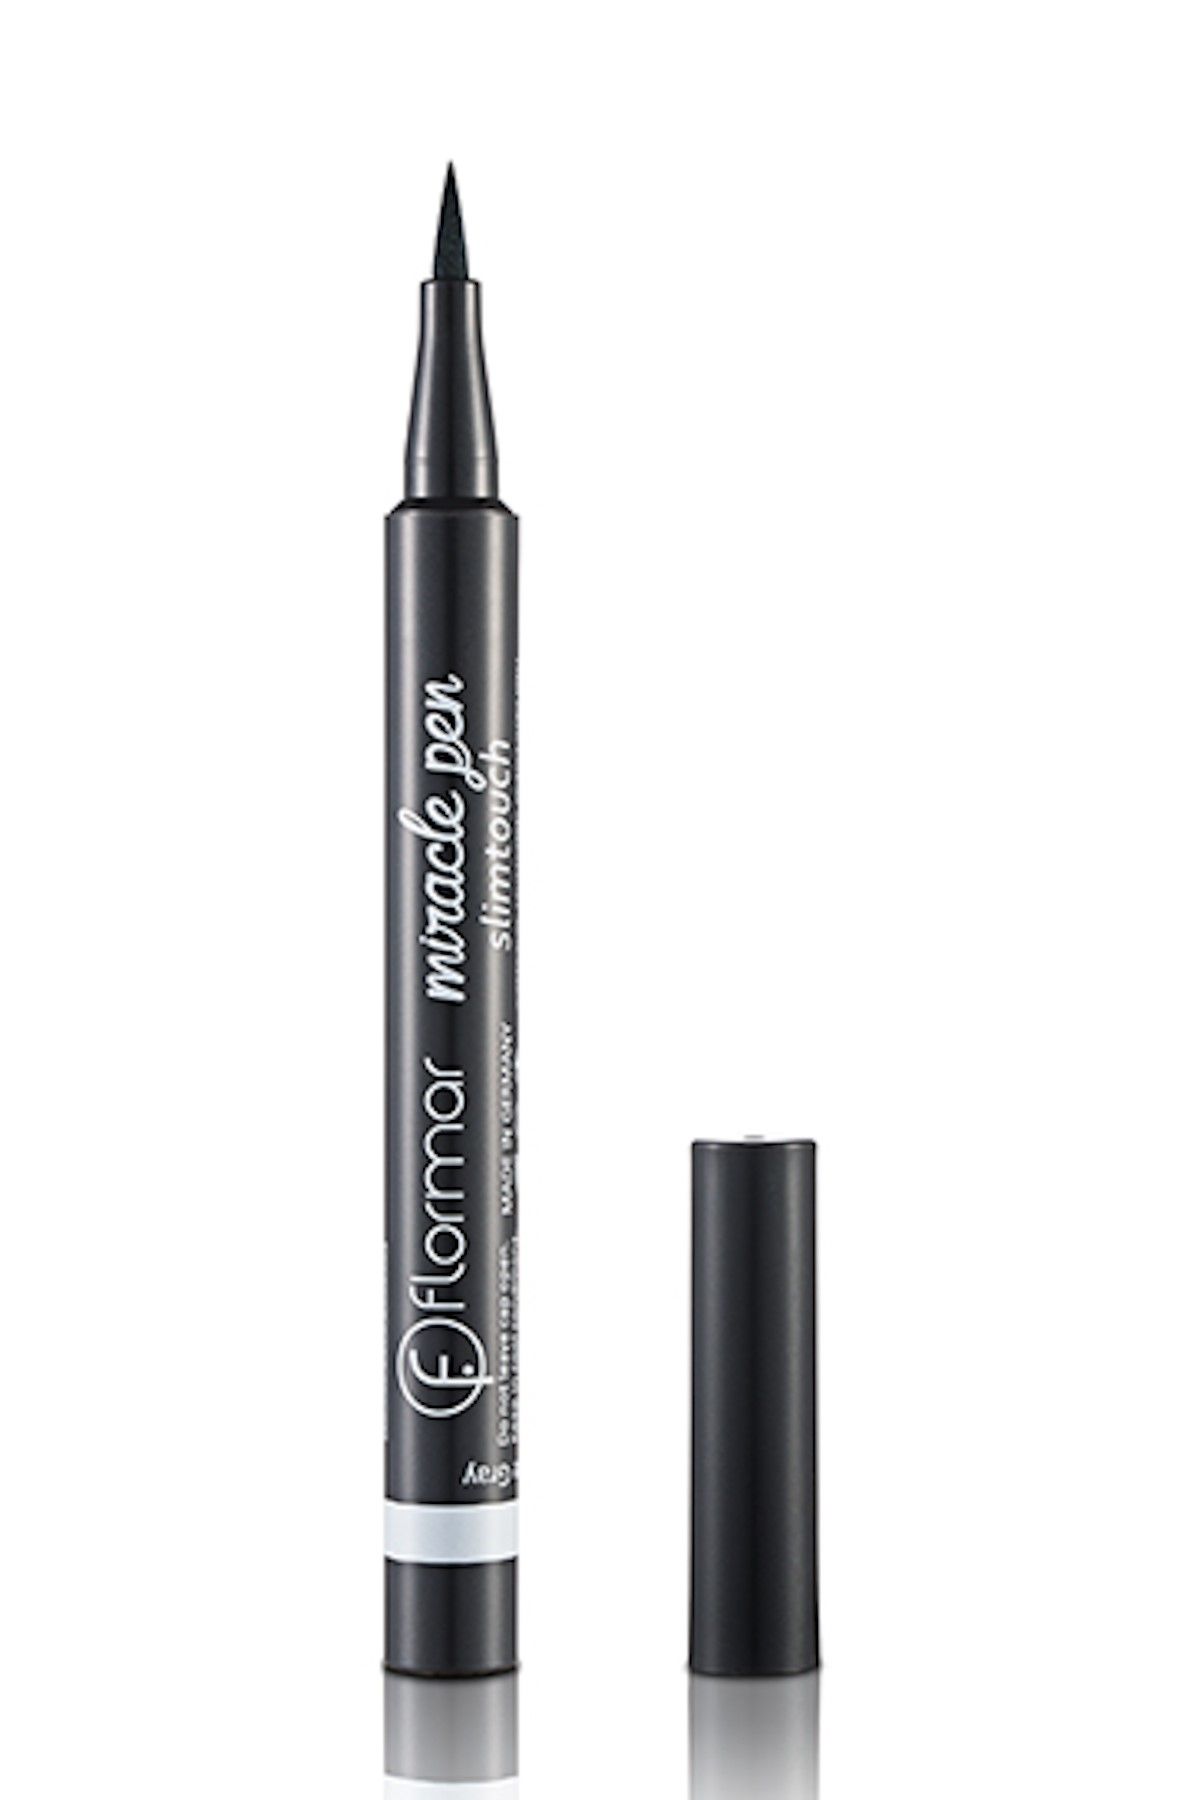 Flormar Koyu Gri Eyeliner - Miracle Pen Slim Touch Hematite Gray 8690604259045